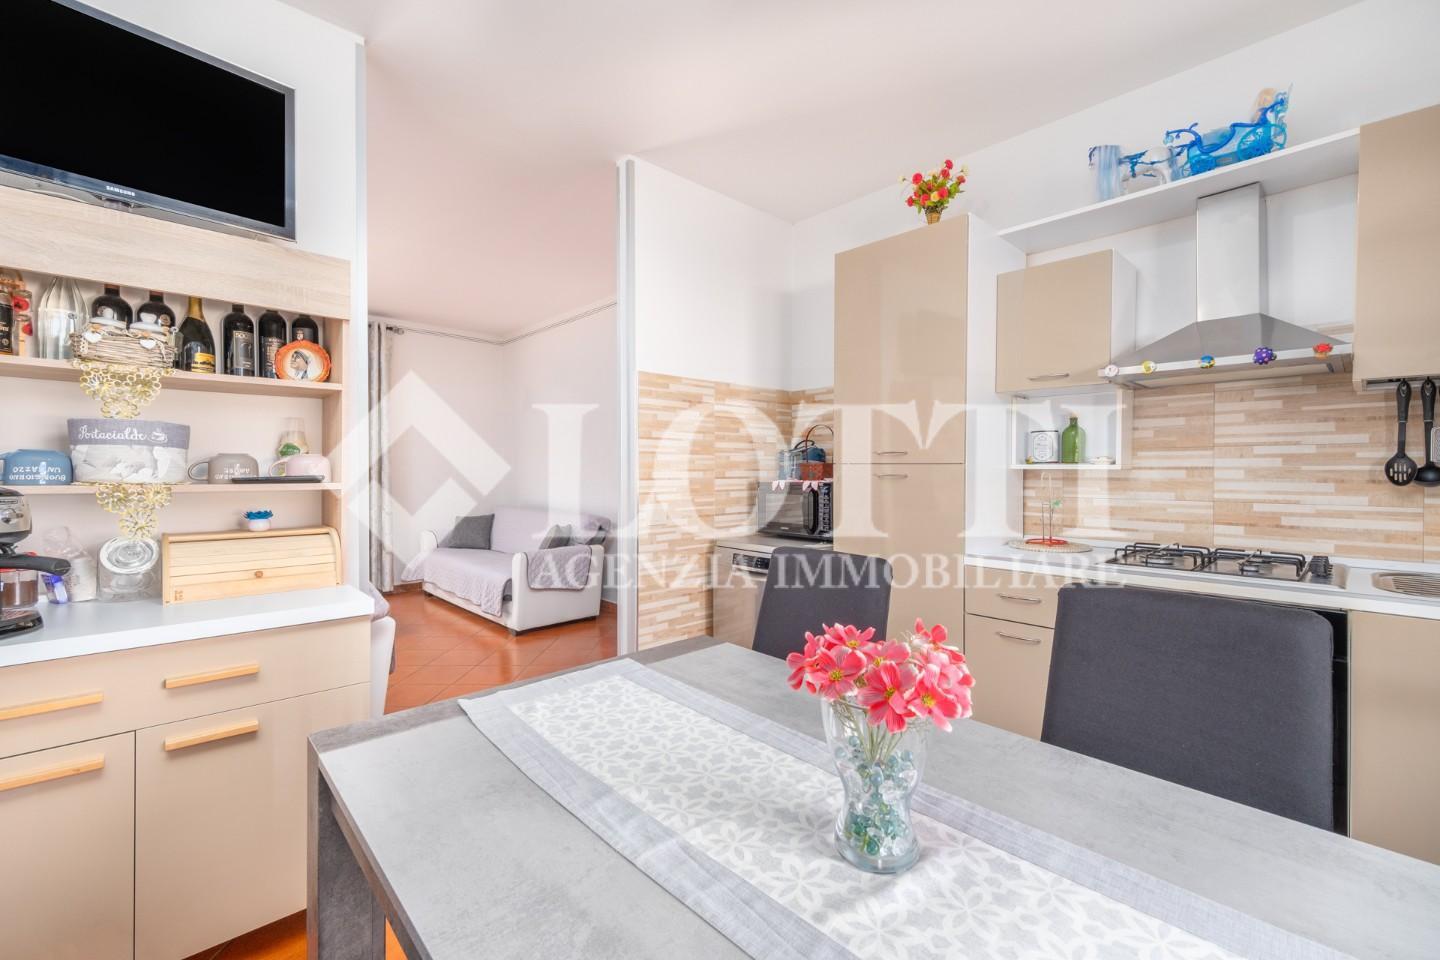 Apartment for sale in Bientina (PI)